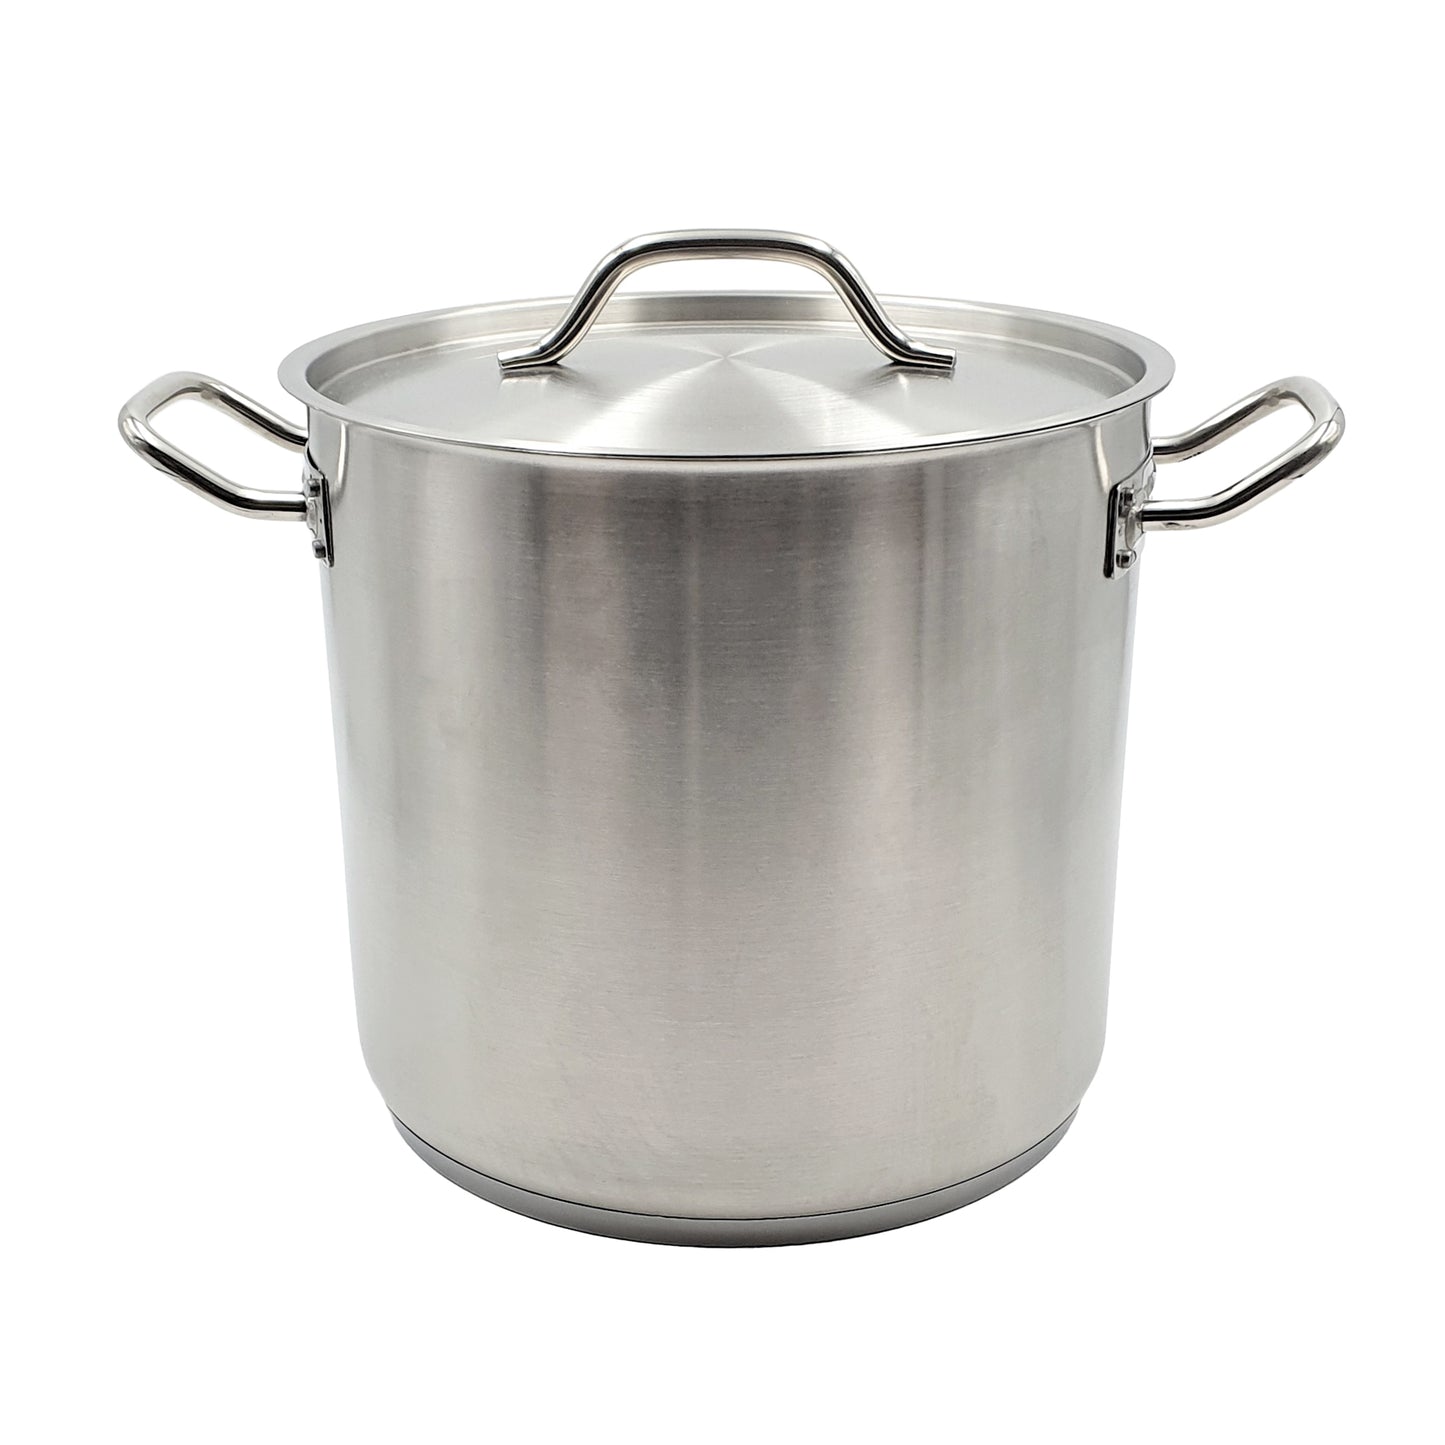 Italian Made 120 litre aluminium stock pot with lid used for making tomato passata sauce.